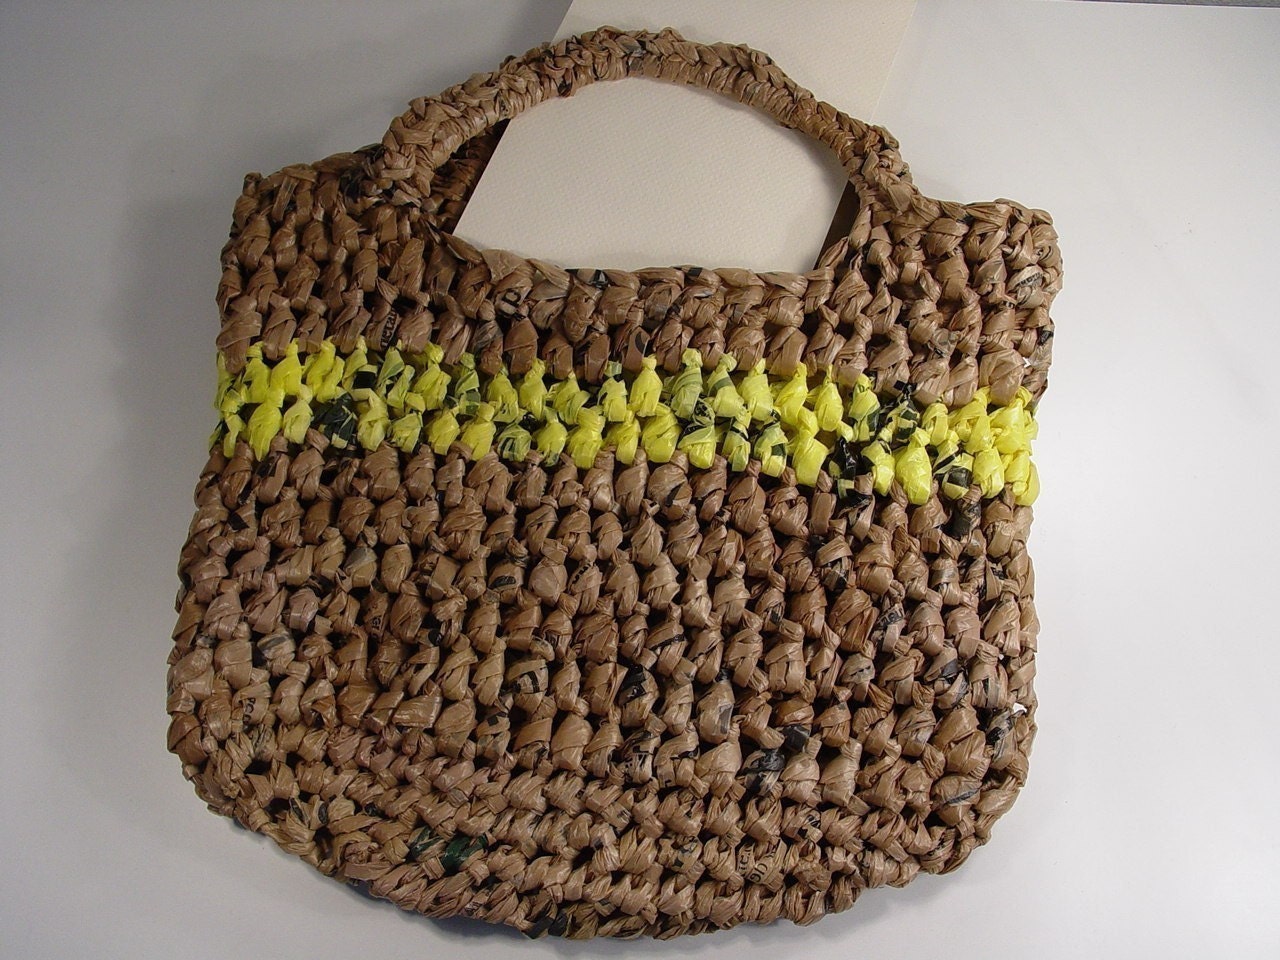 Recycled Plastic Bag Tote, crochet pattern pdf